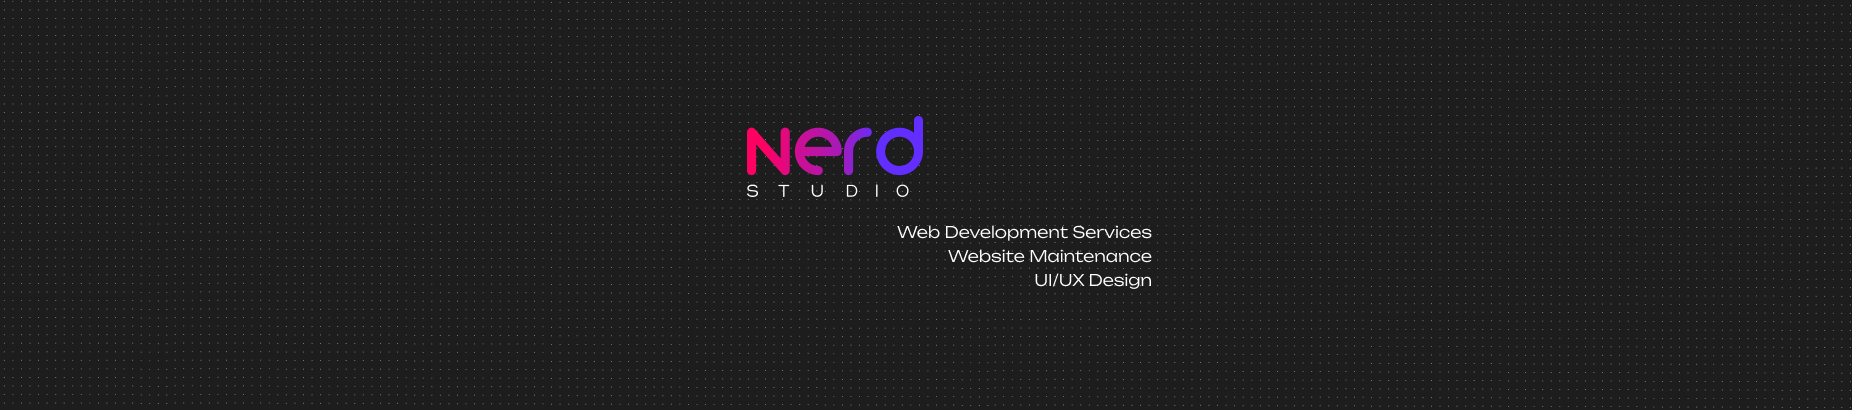 Nerd studio のプロファイルバナー